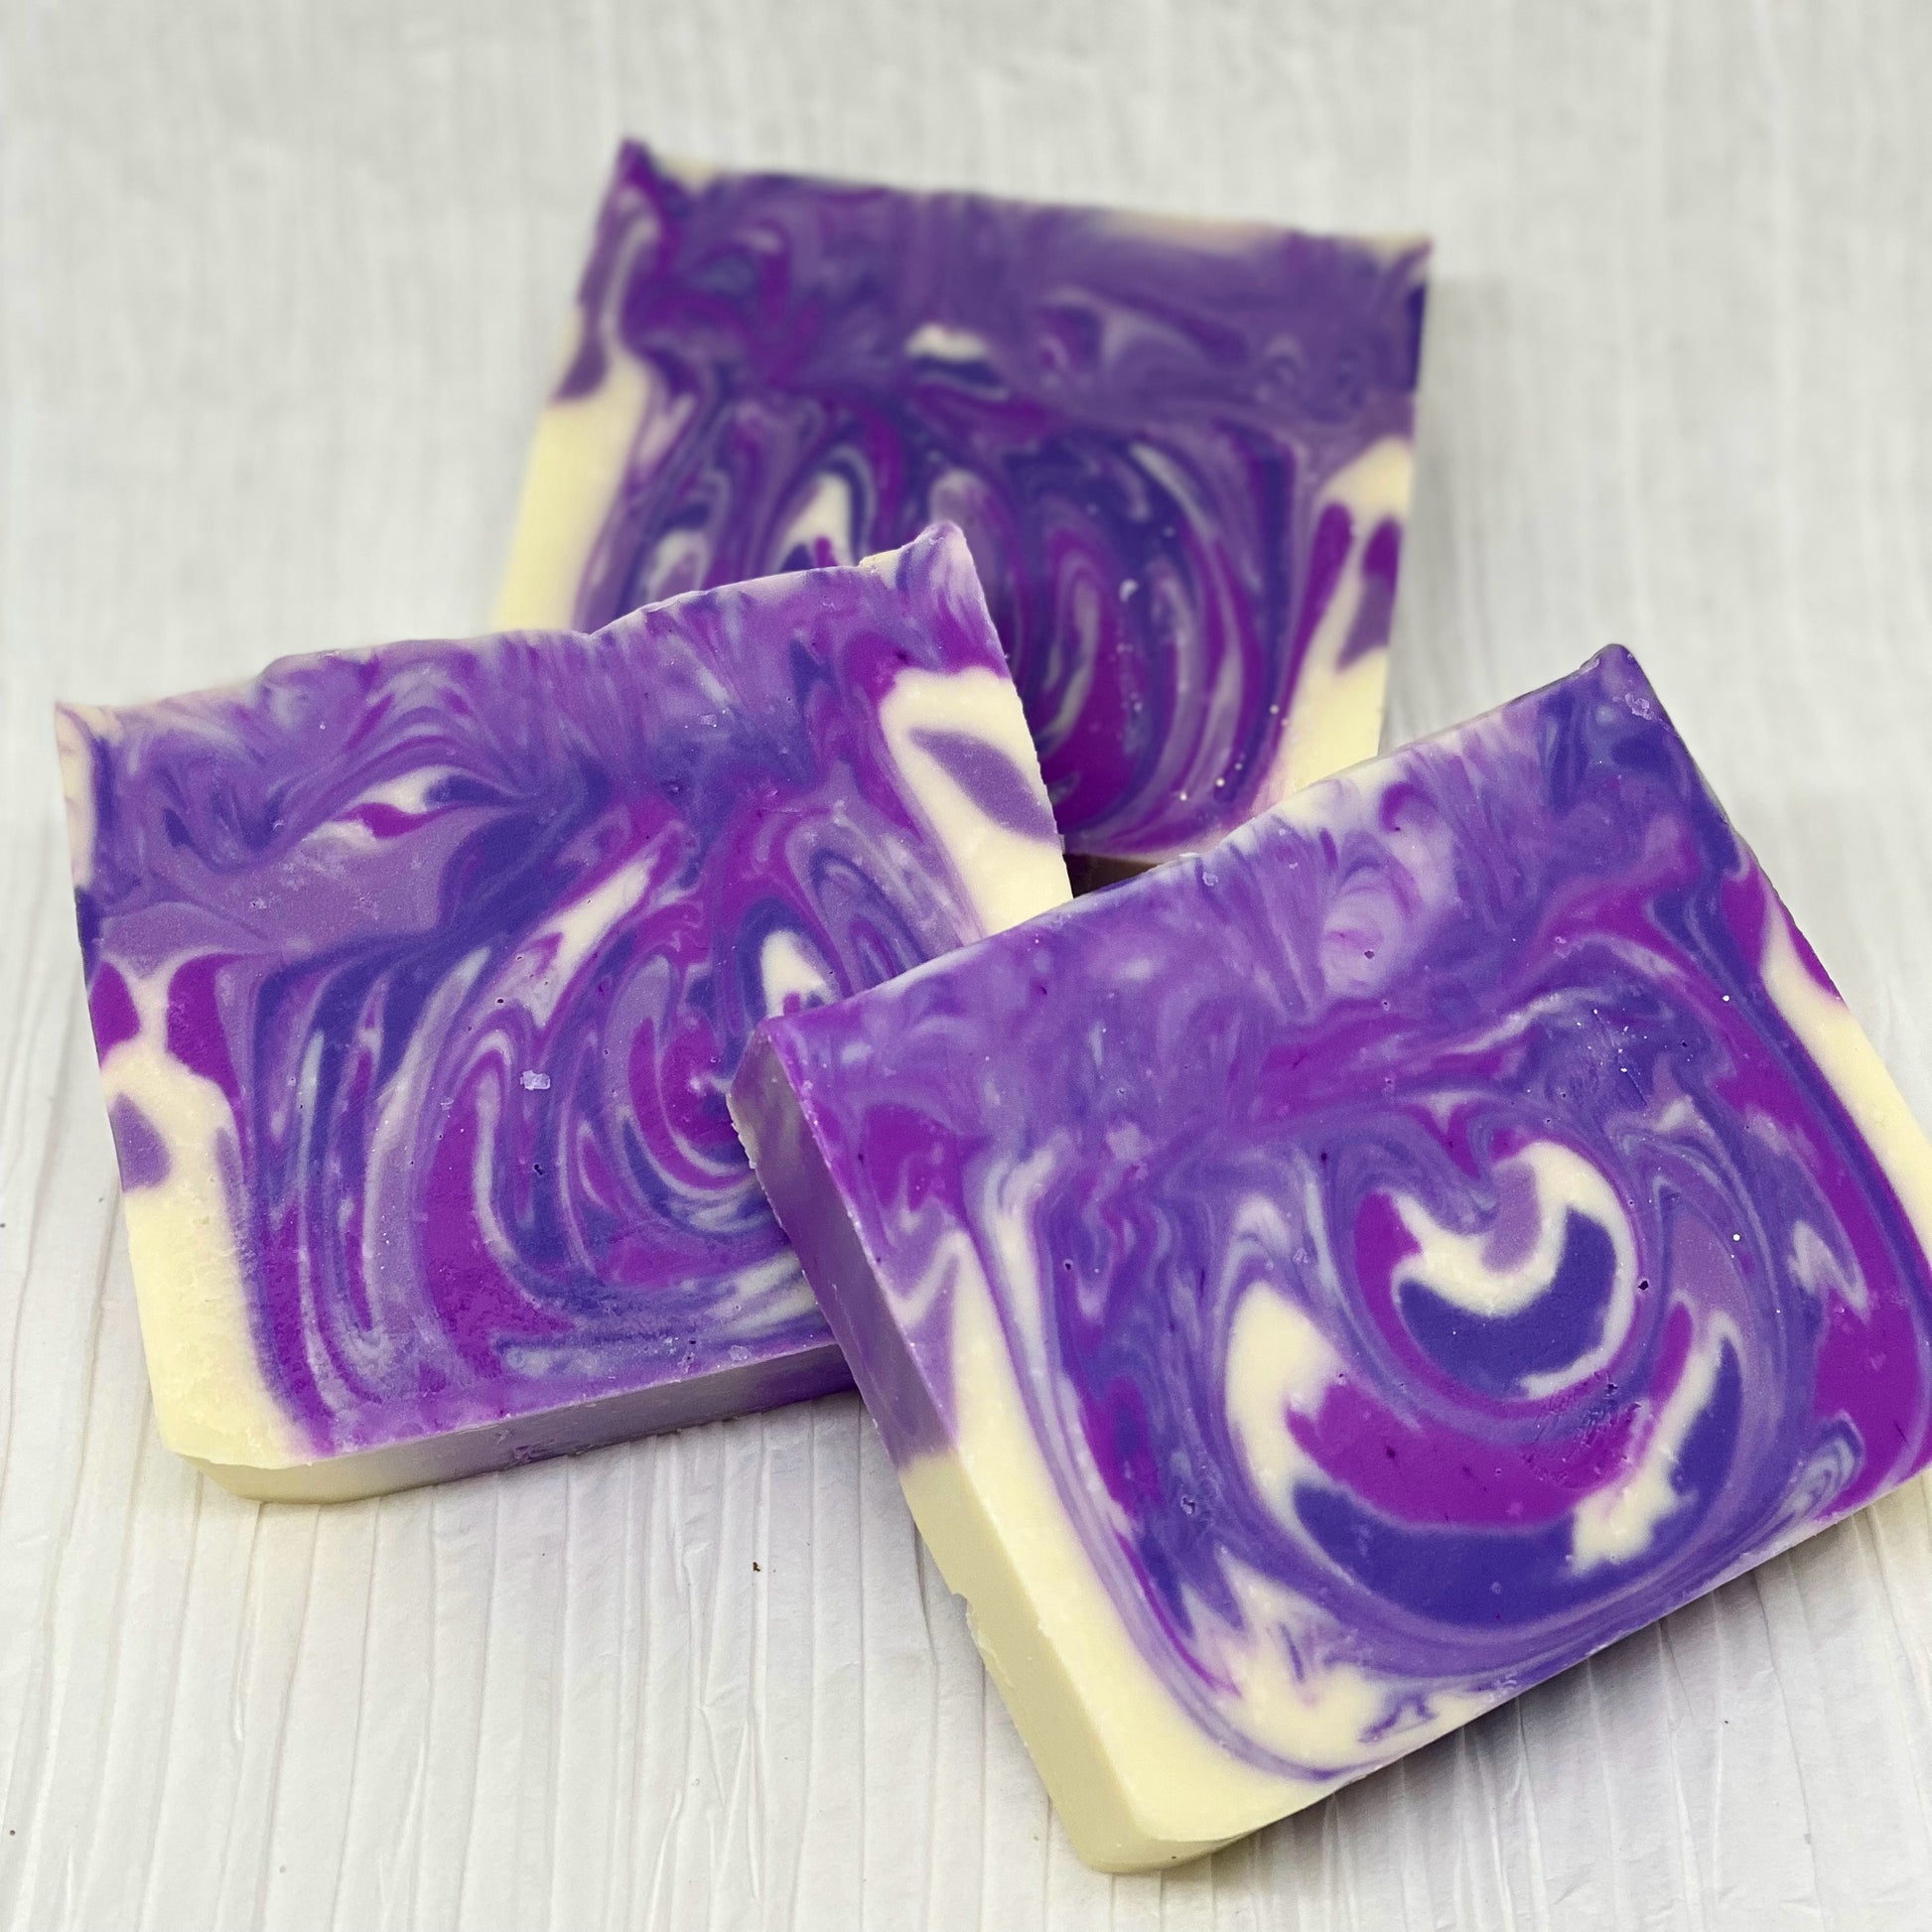 Homemade lavender soaps. Violet and white color handmade soap bars